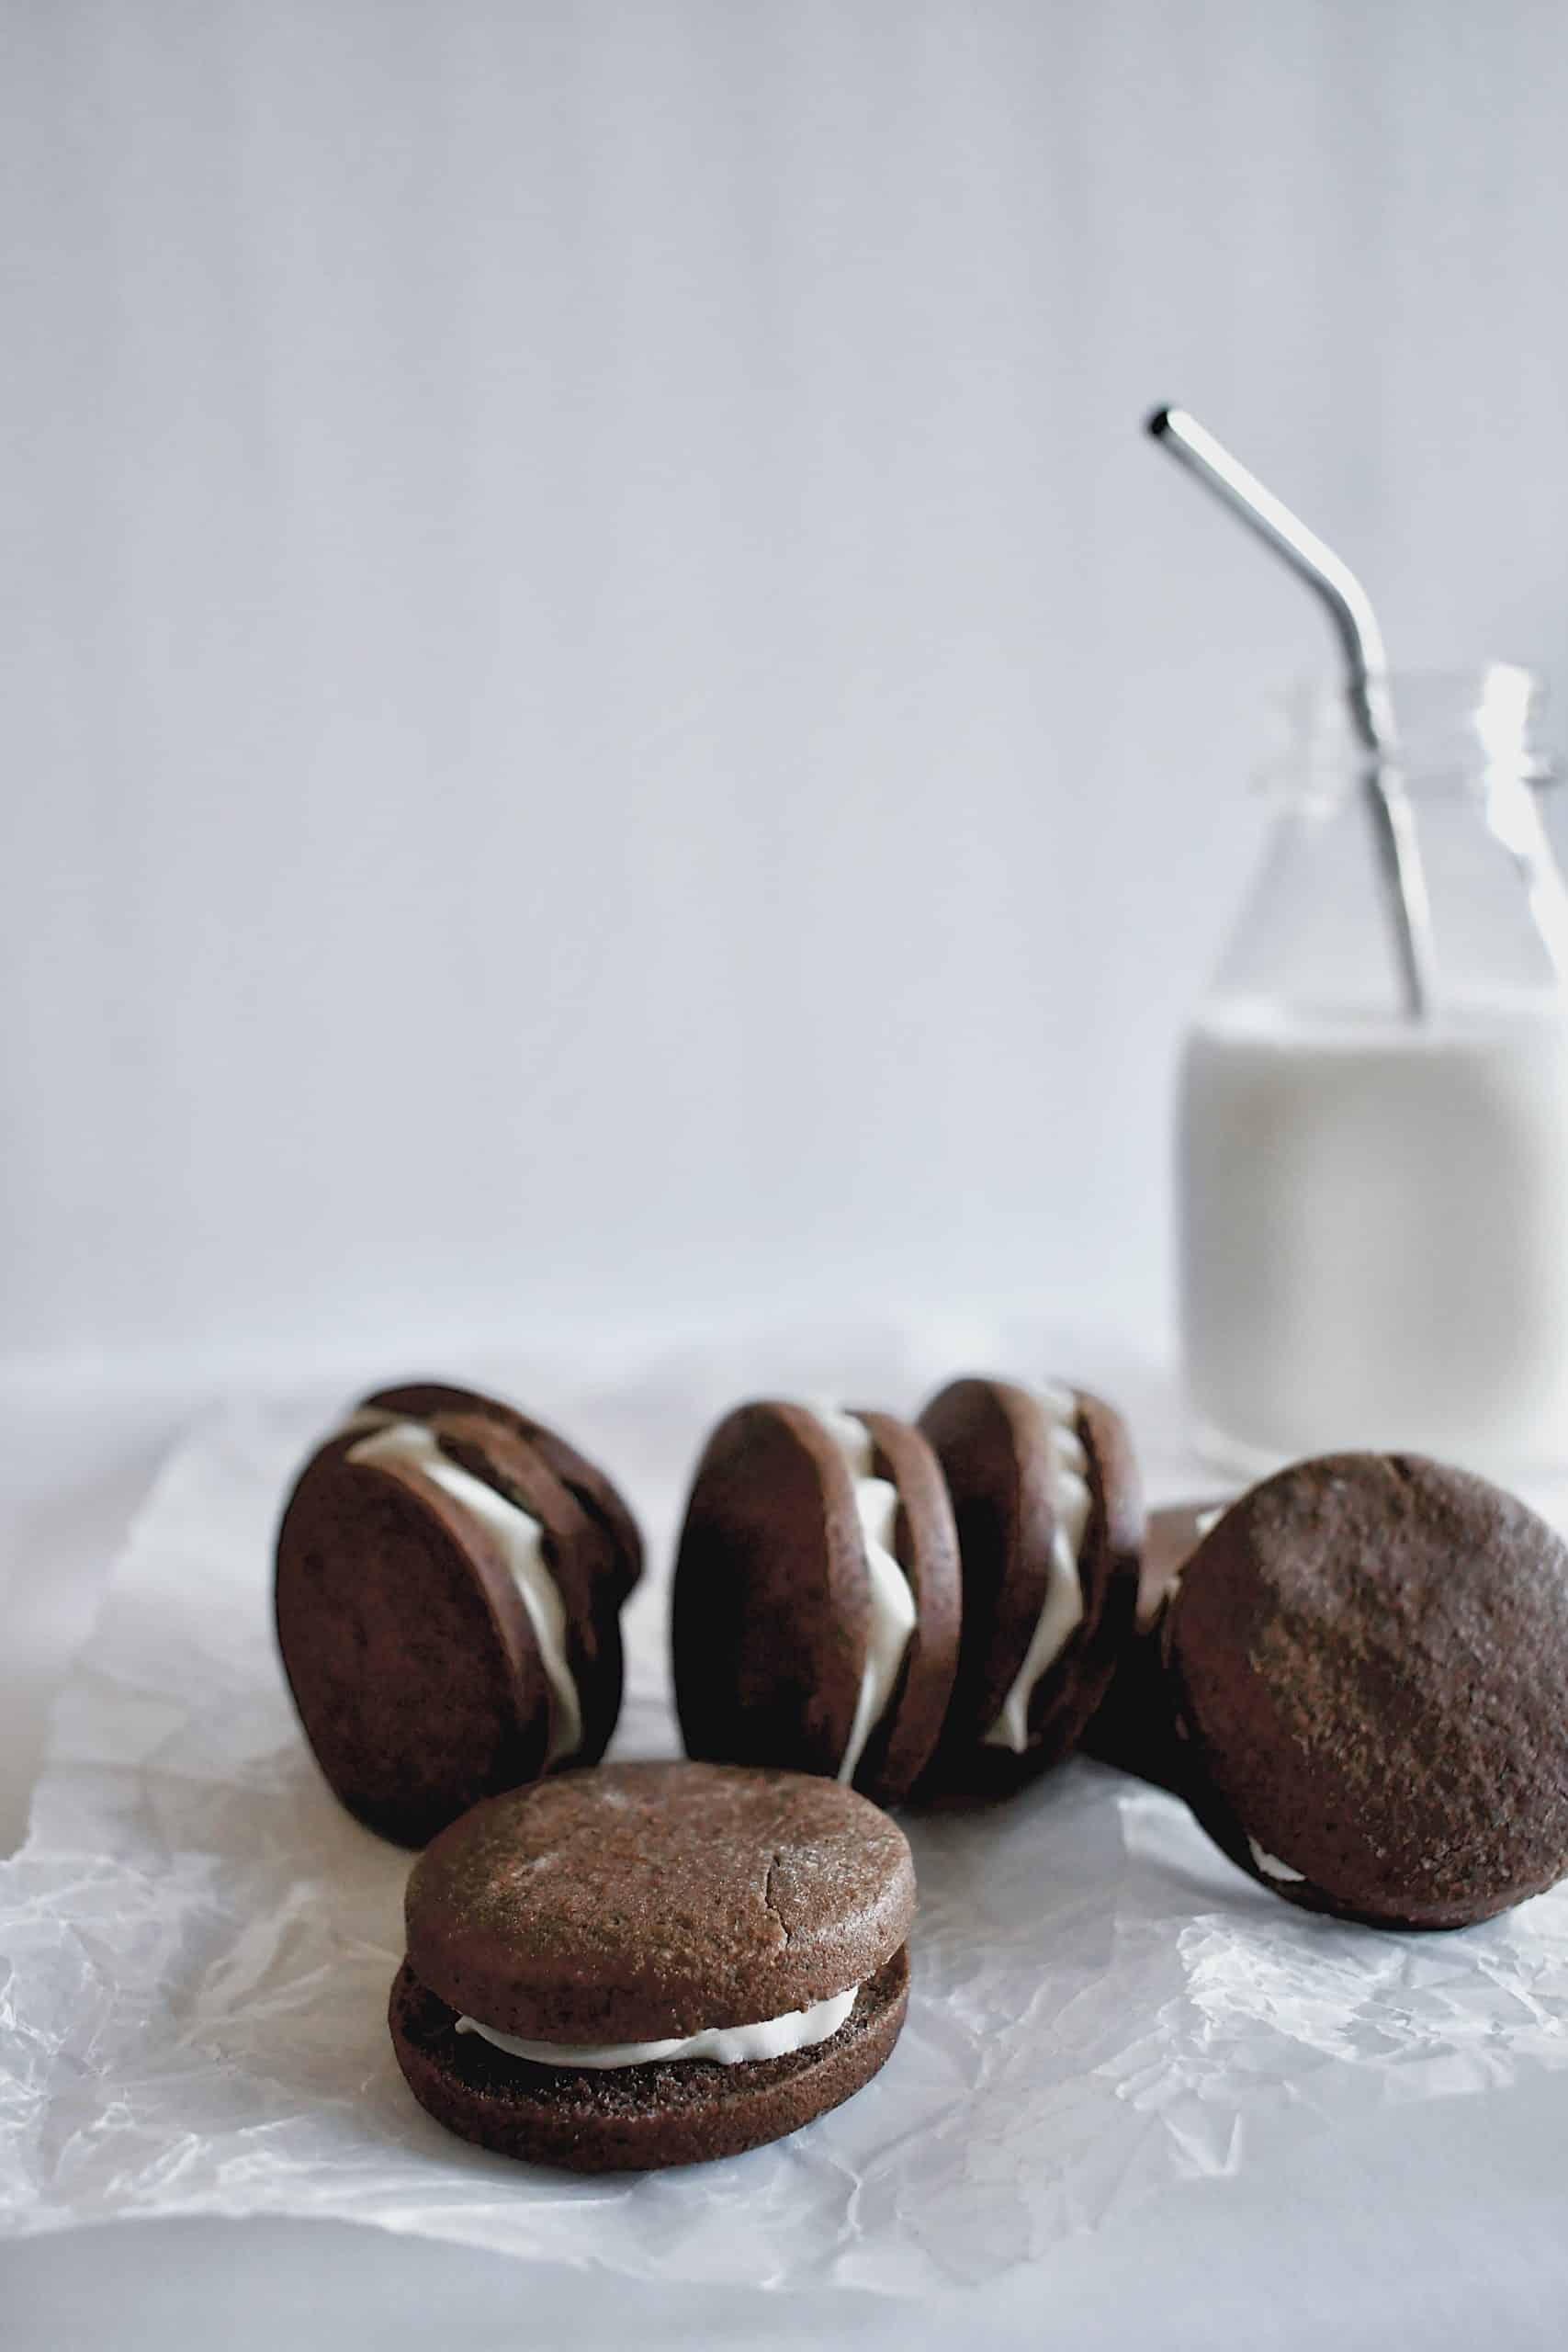 Homemade Oreo Style Cookies and milk.